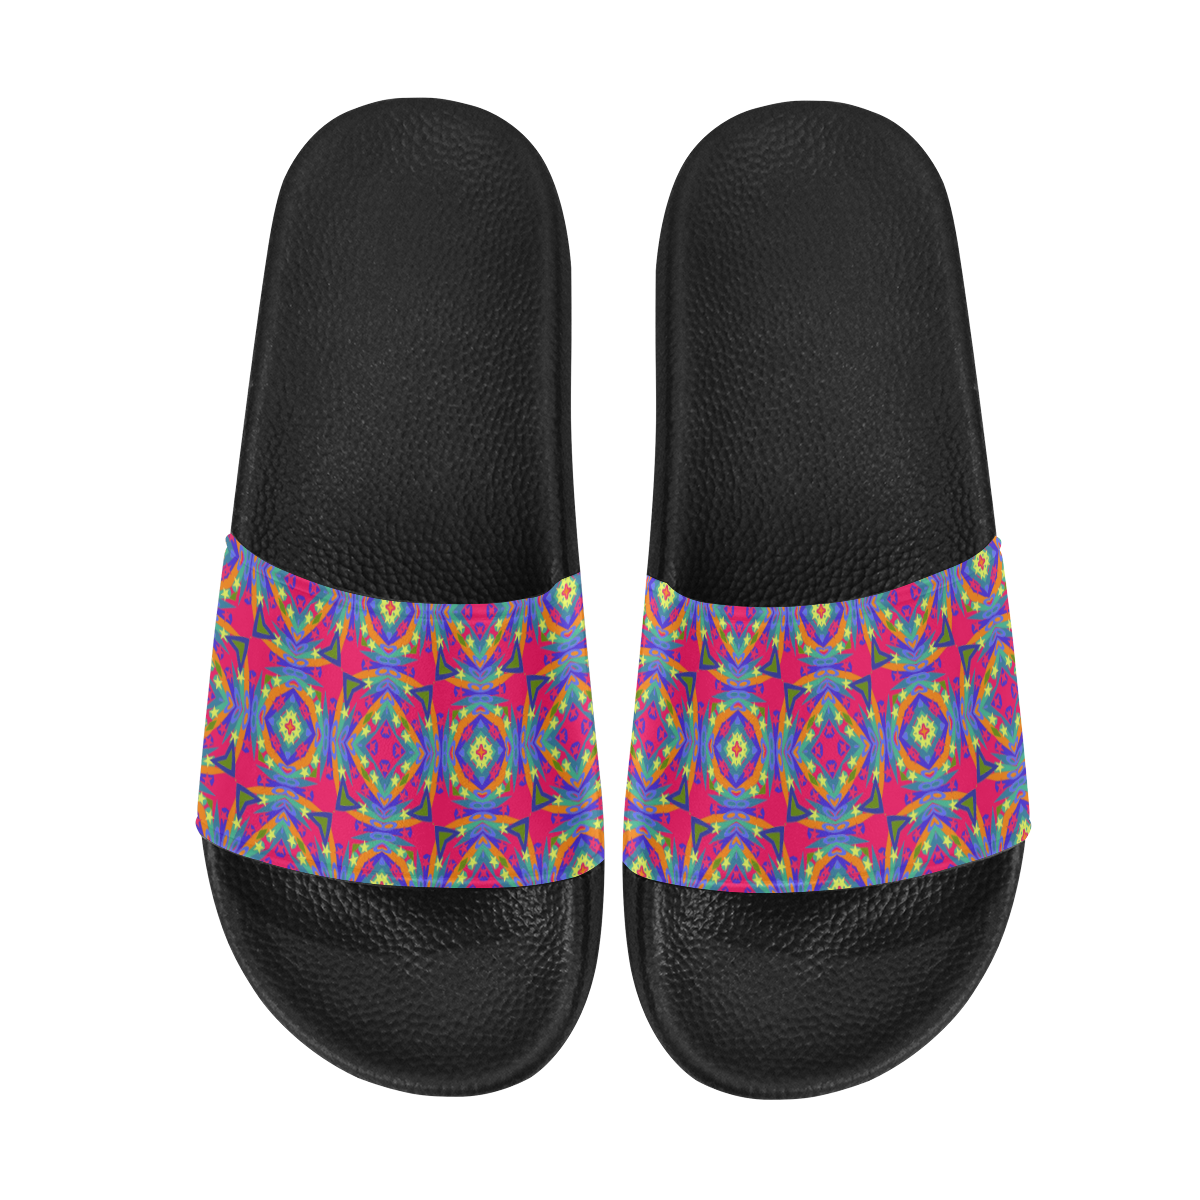 fab aztec Women's Slide Sandals (Model 057)